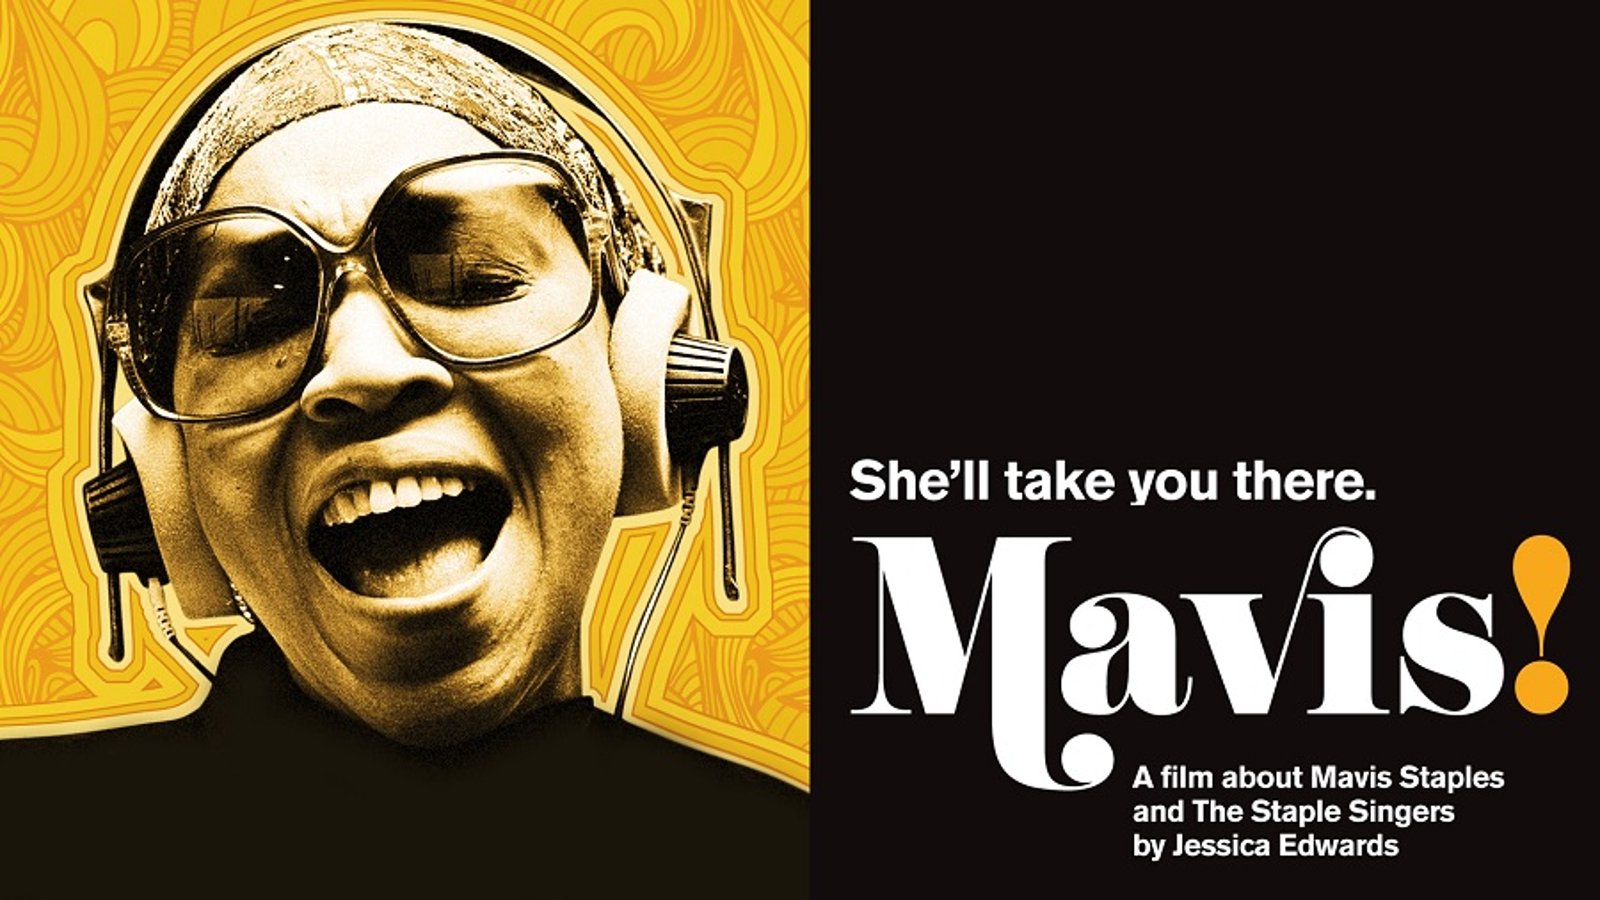 Mavis! - Gospel Music Legend and Civil Rights Activist Mavis Staples